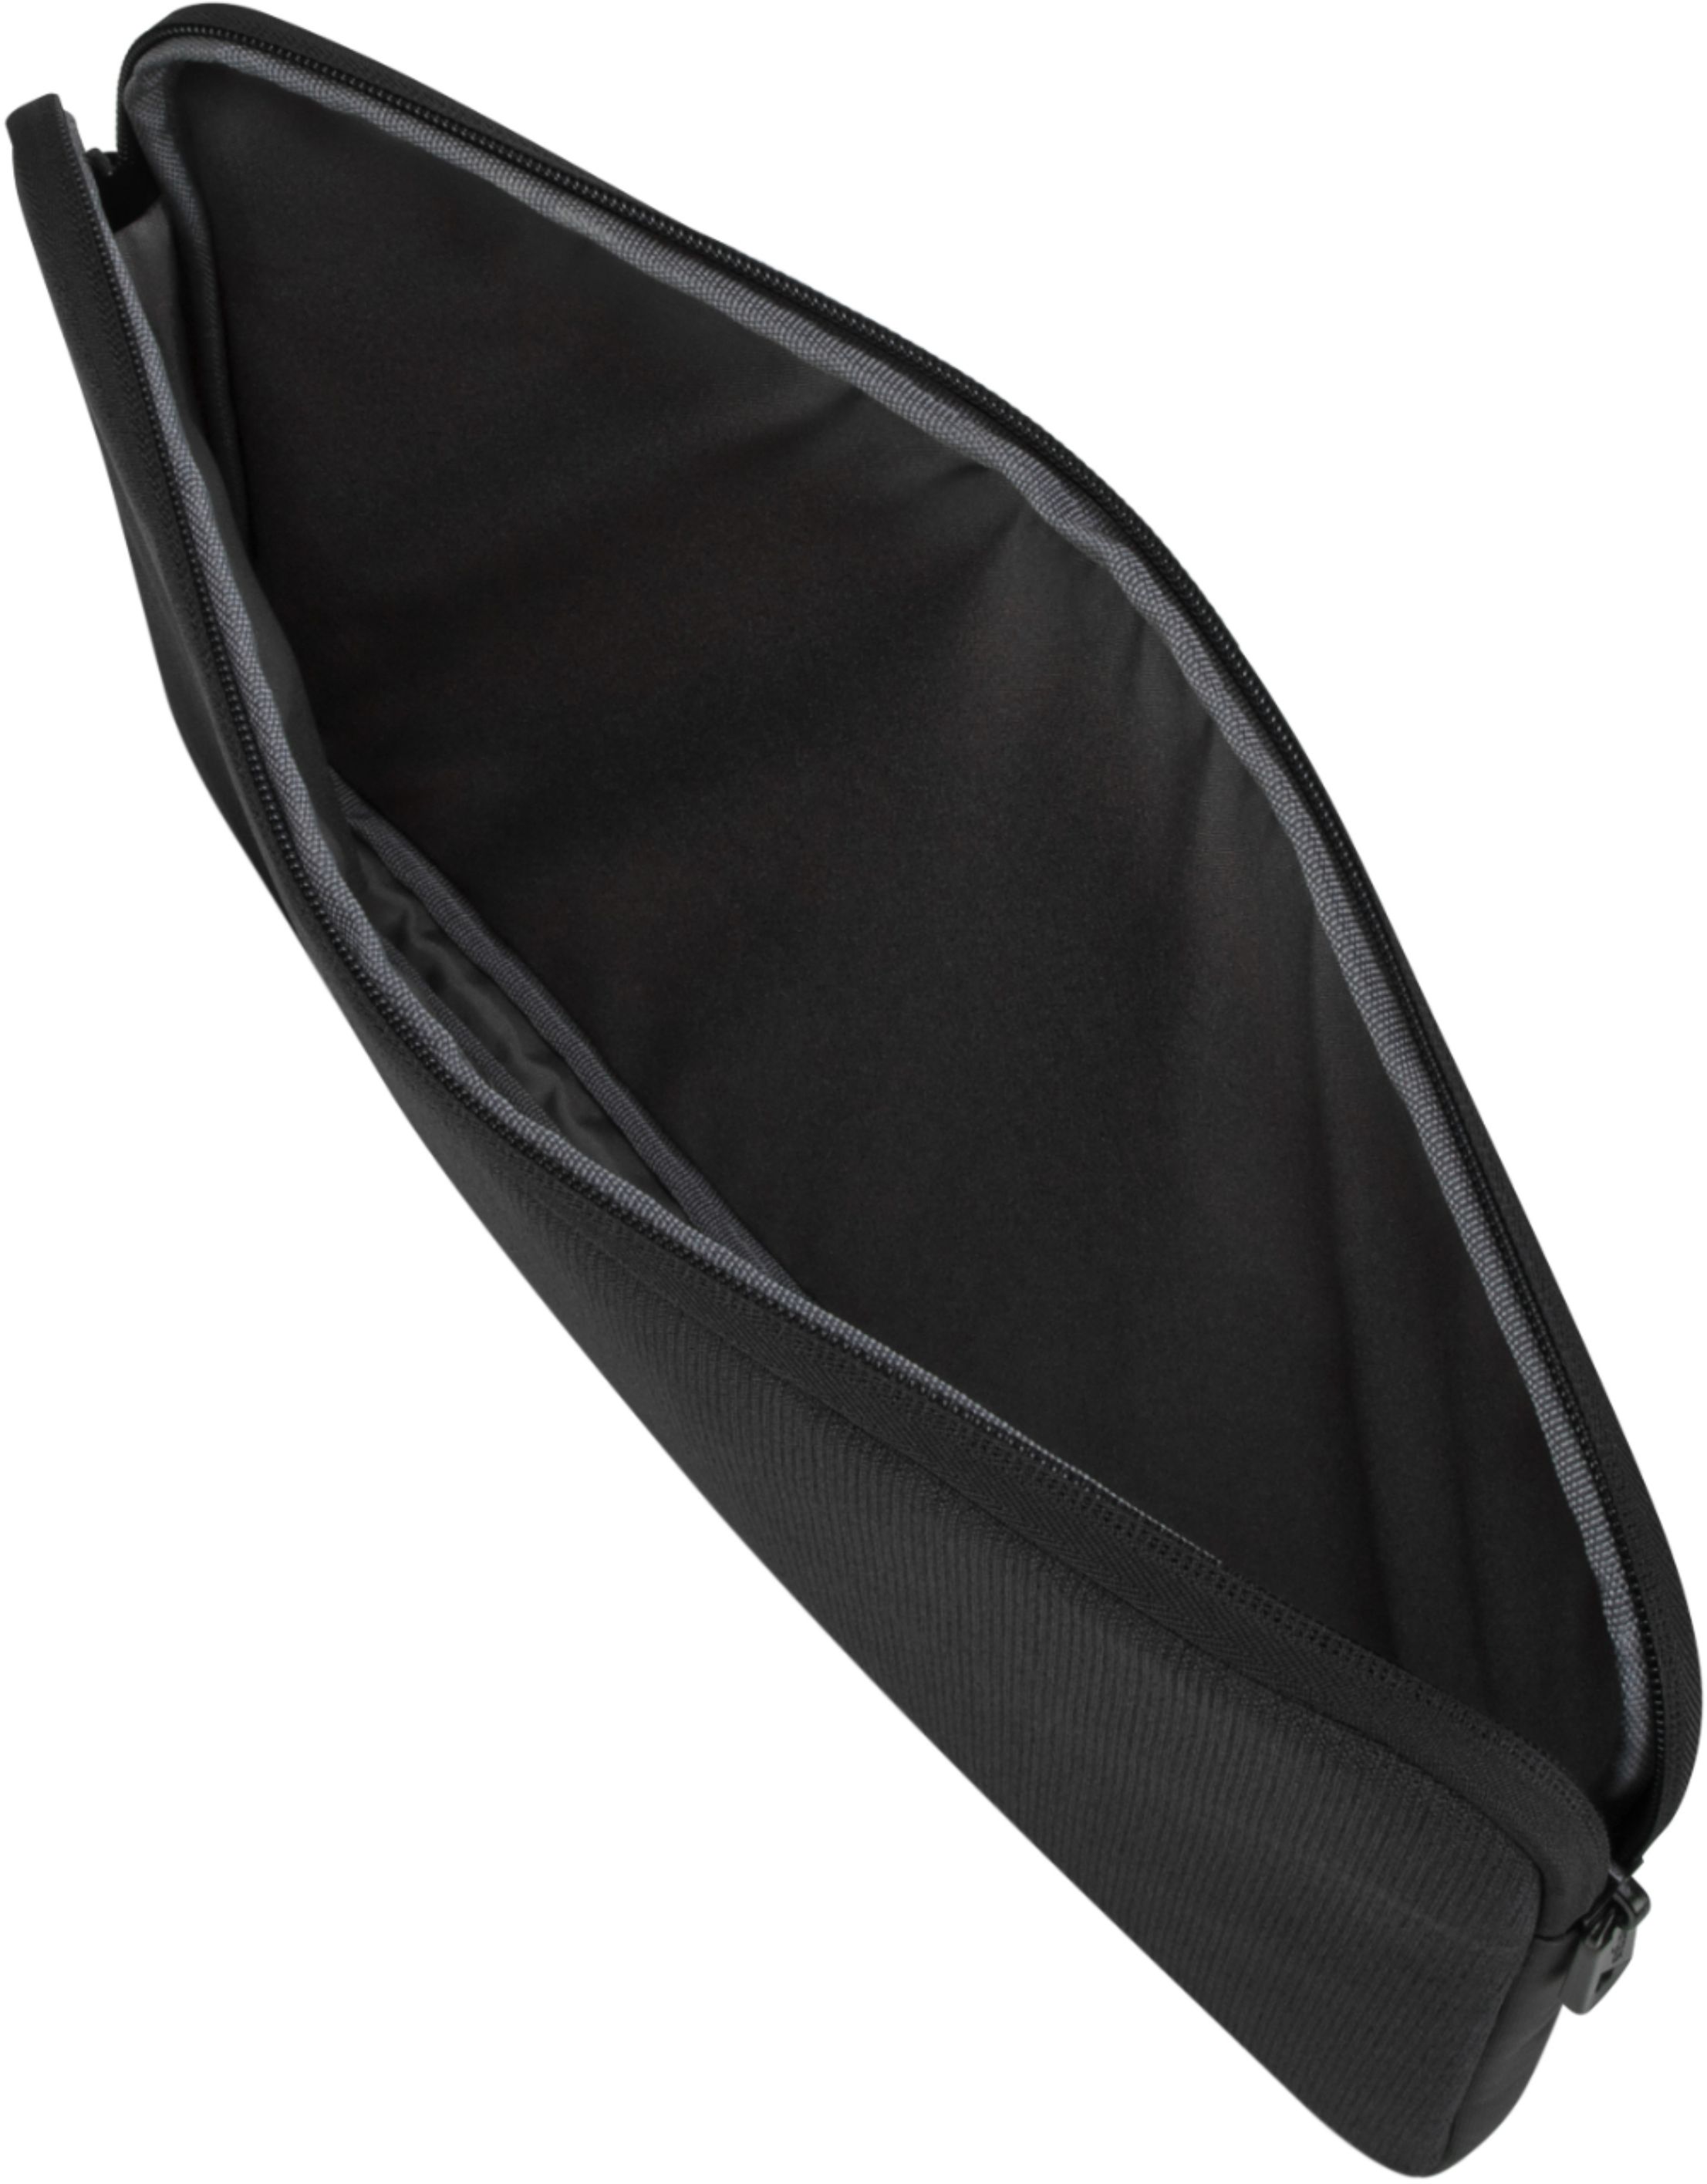 basic black Laptop Sleeve for Sale by JazminCrist